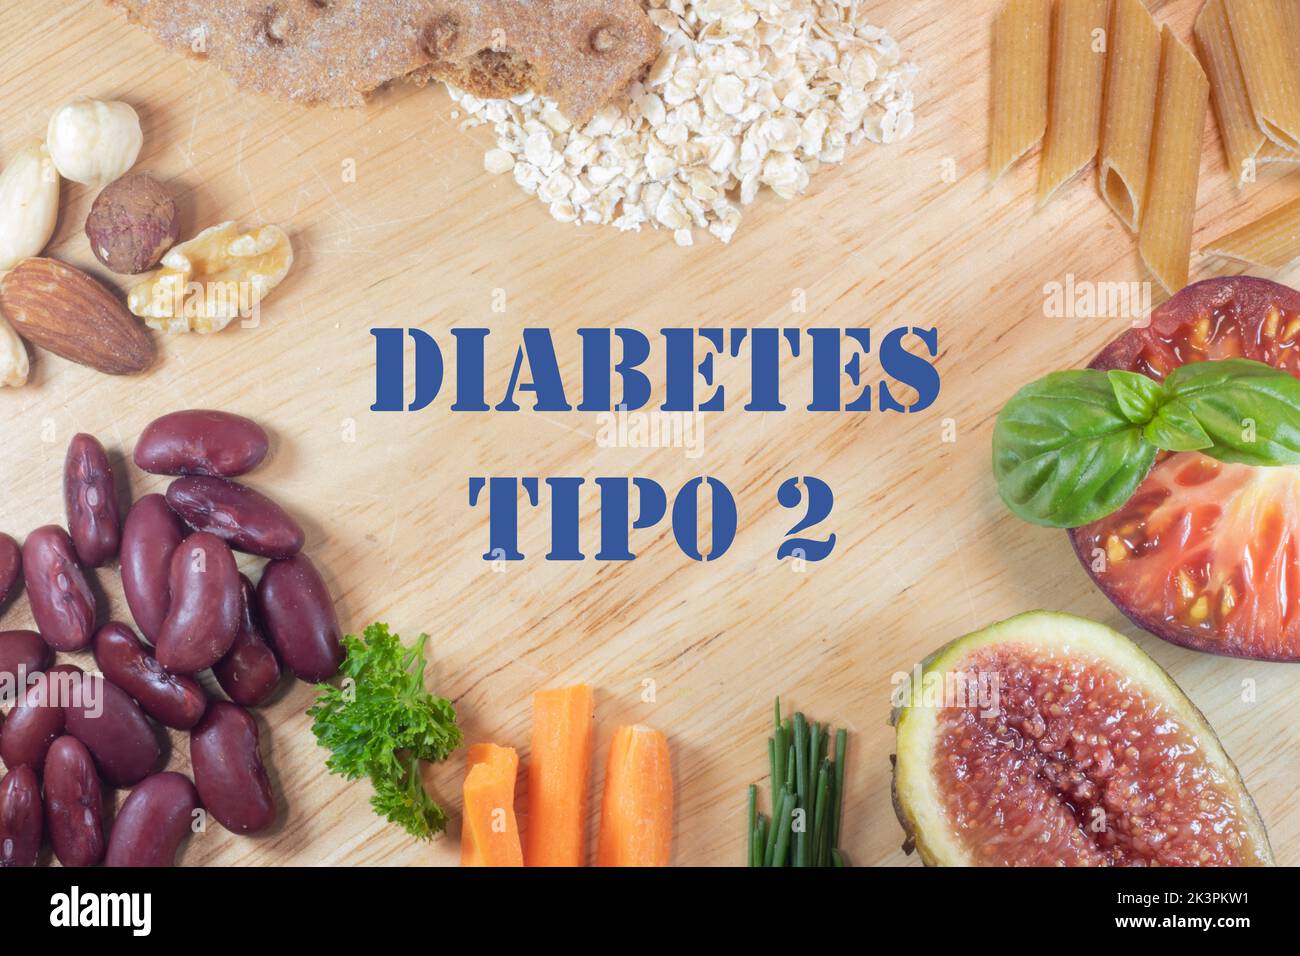 diabetes mellitus. Low sugar, high fiber, protein foods Stock Photo